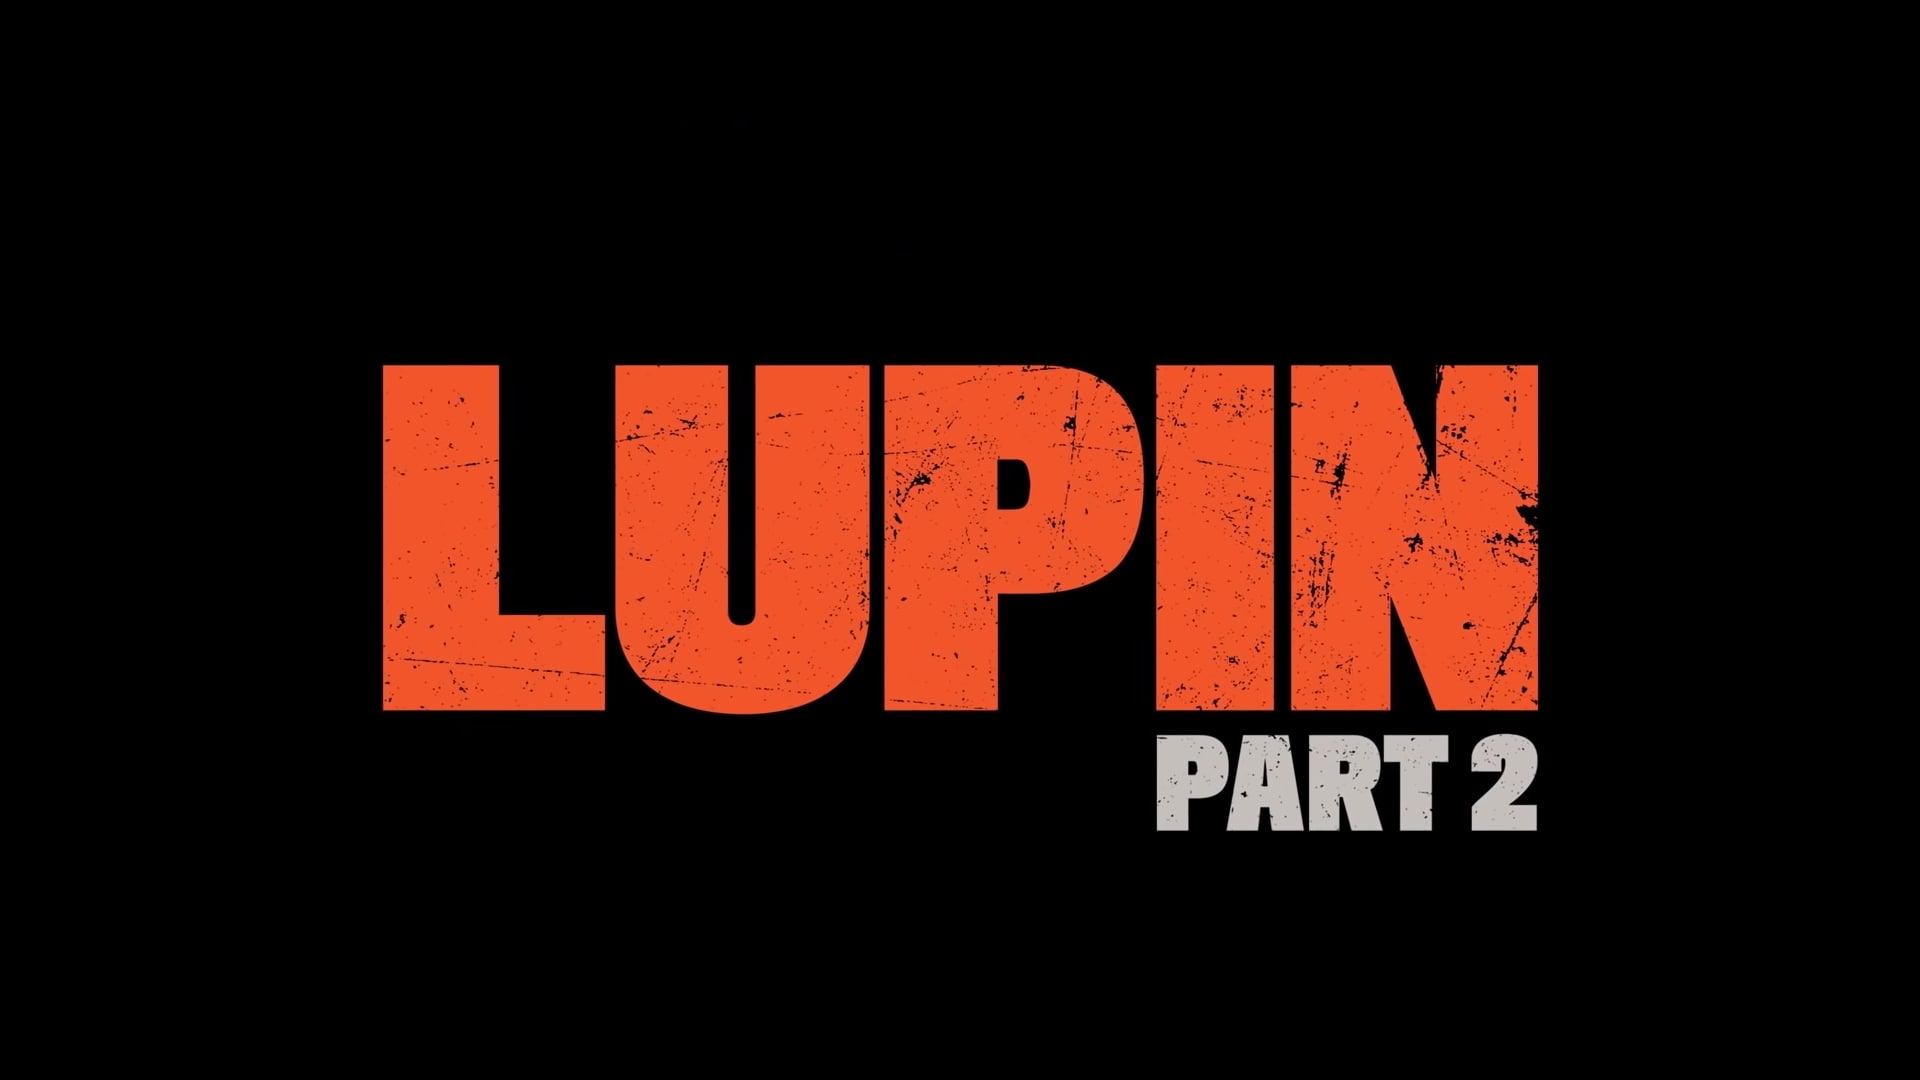 Netflix Lupin Part 2 Trailer, Coming to Netflix in June 2021